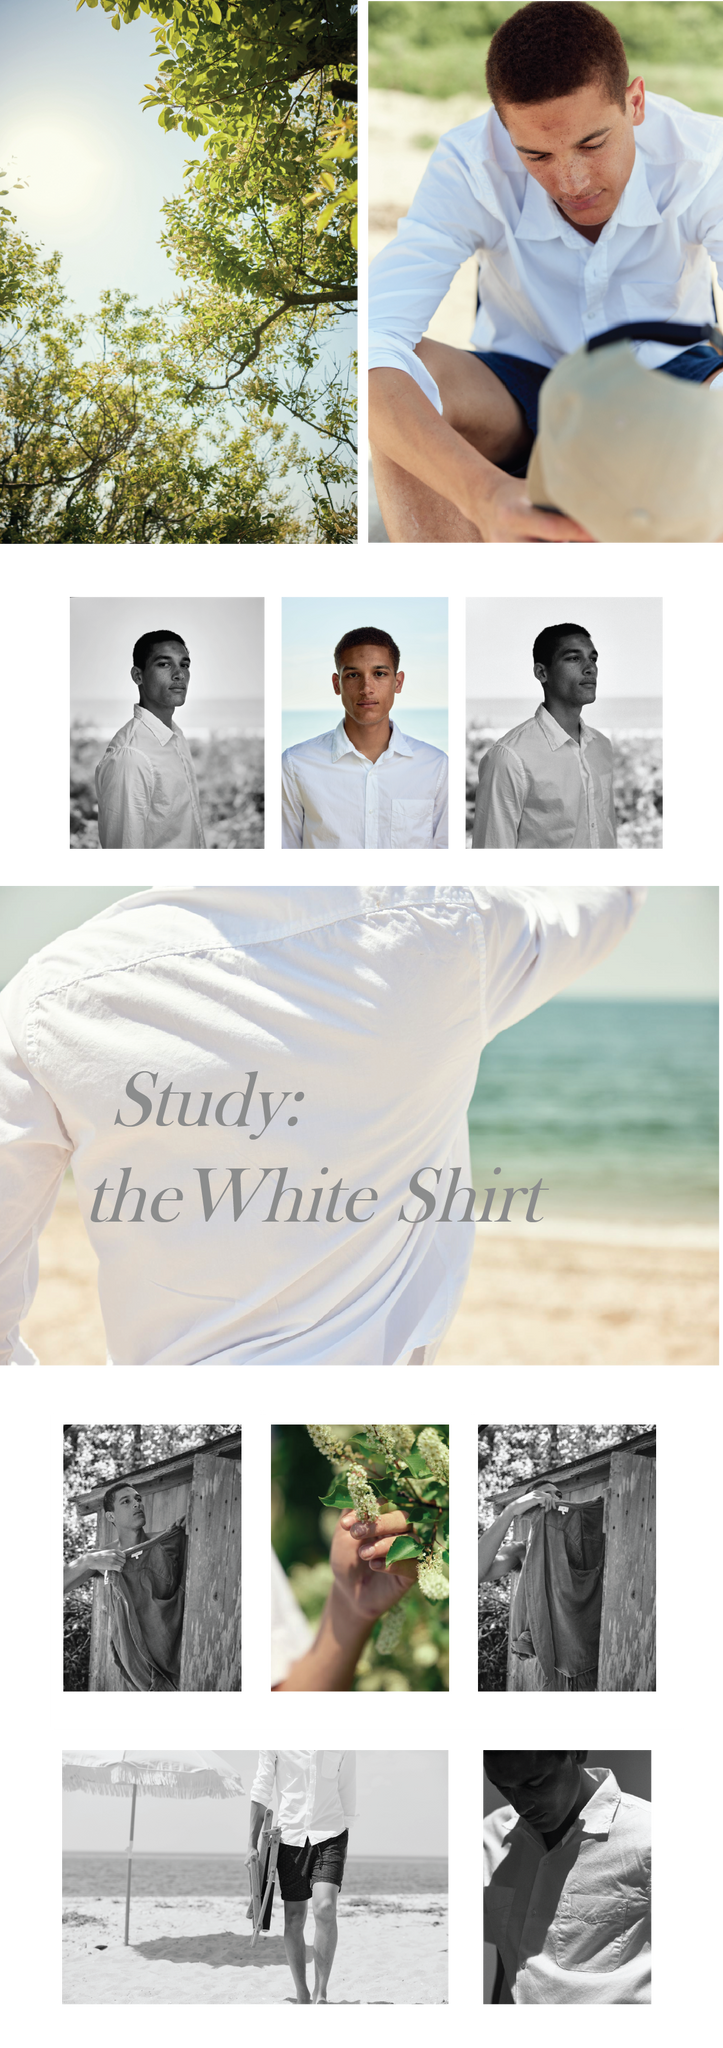 Study: the White Shirt